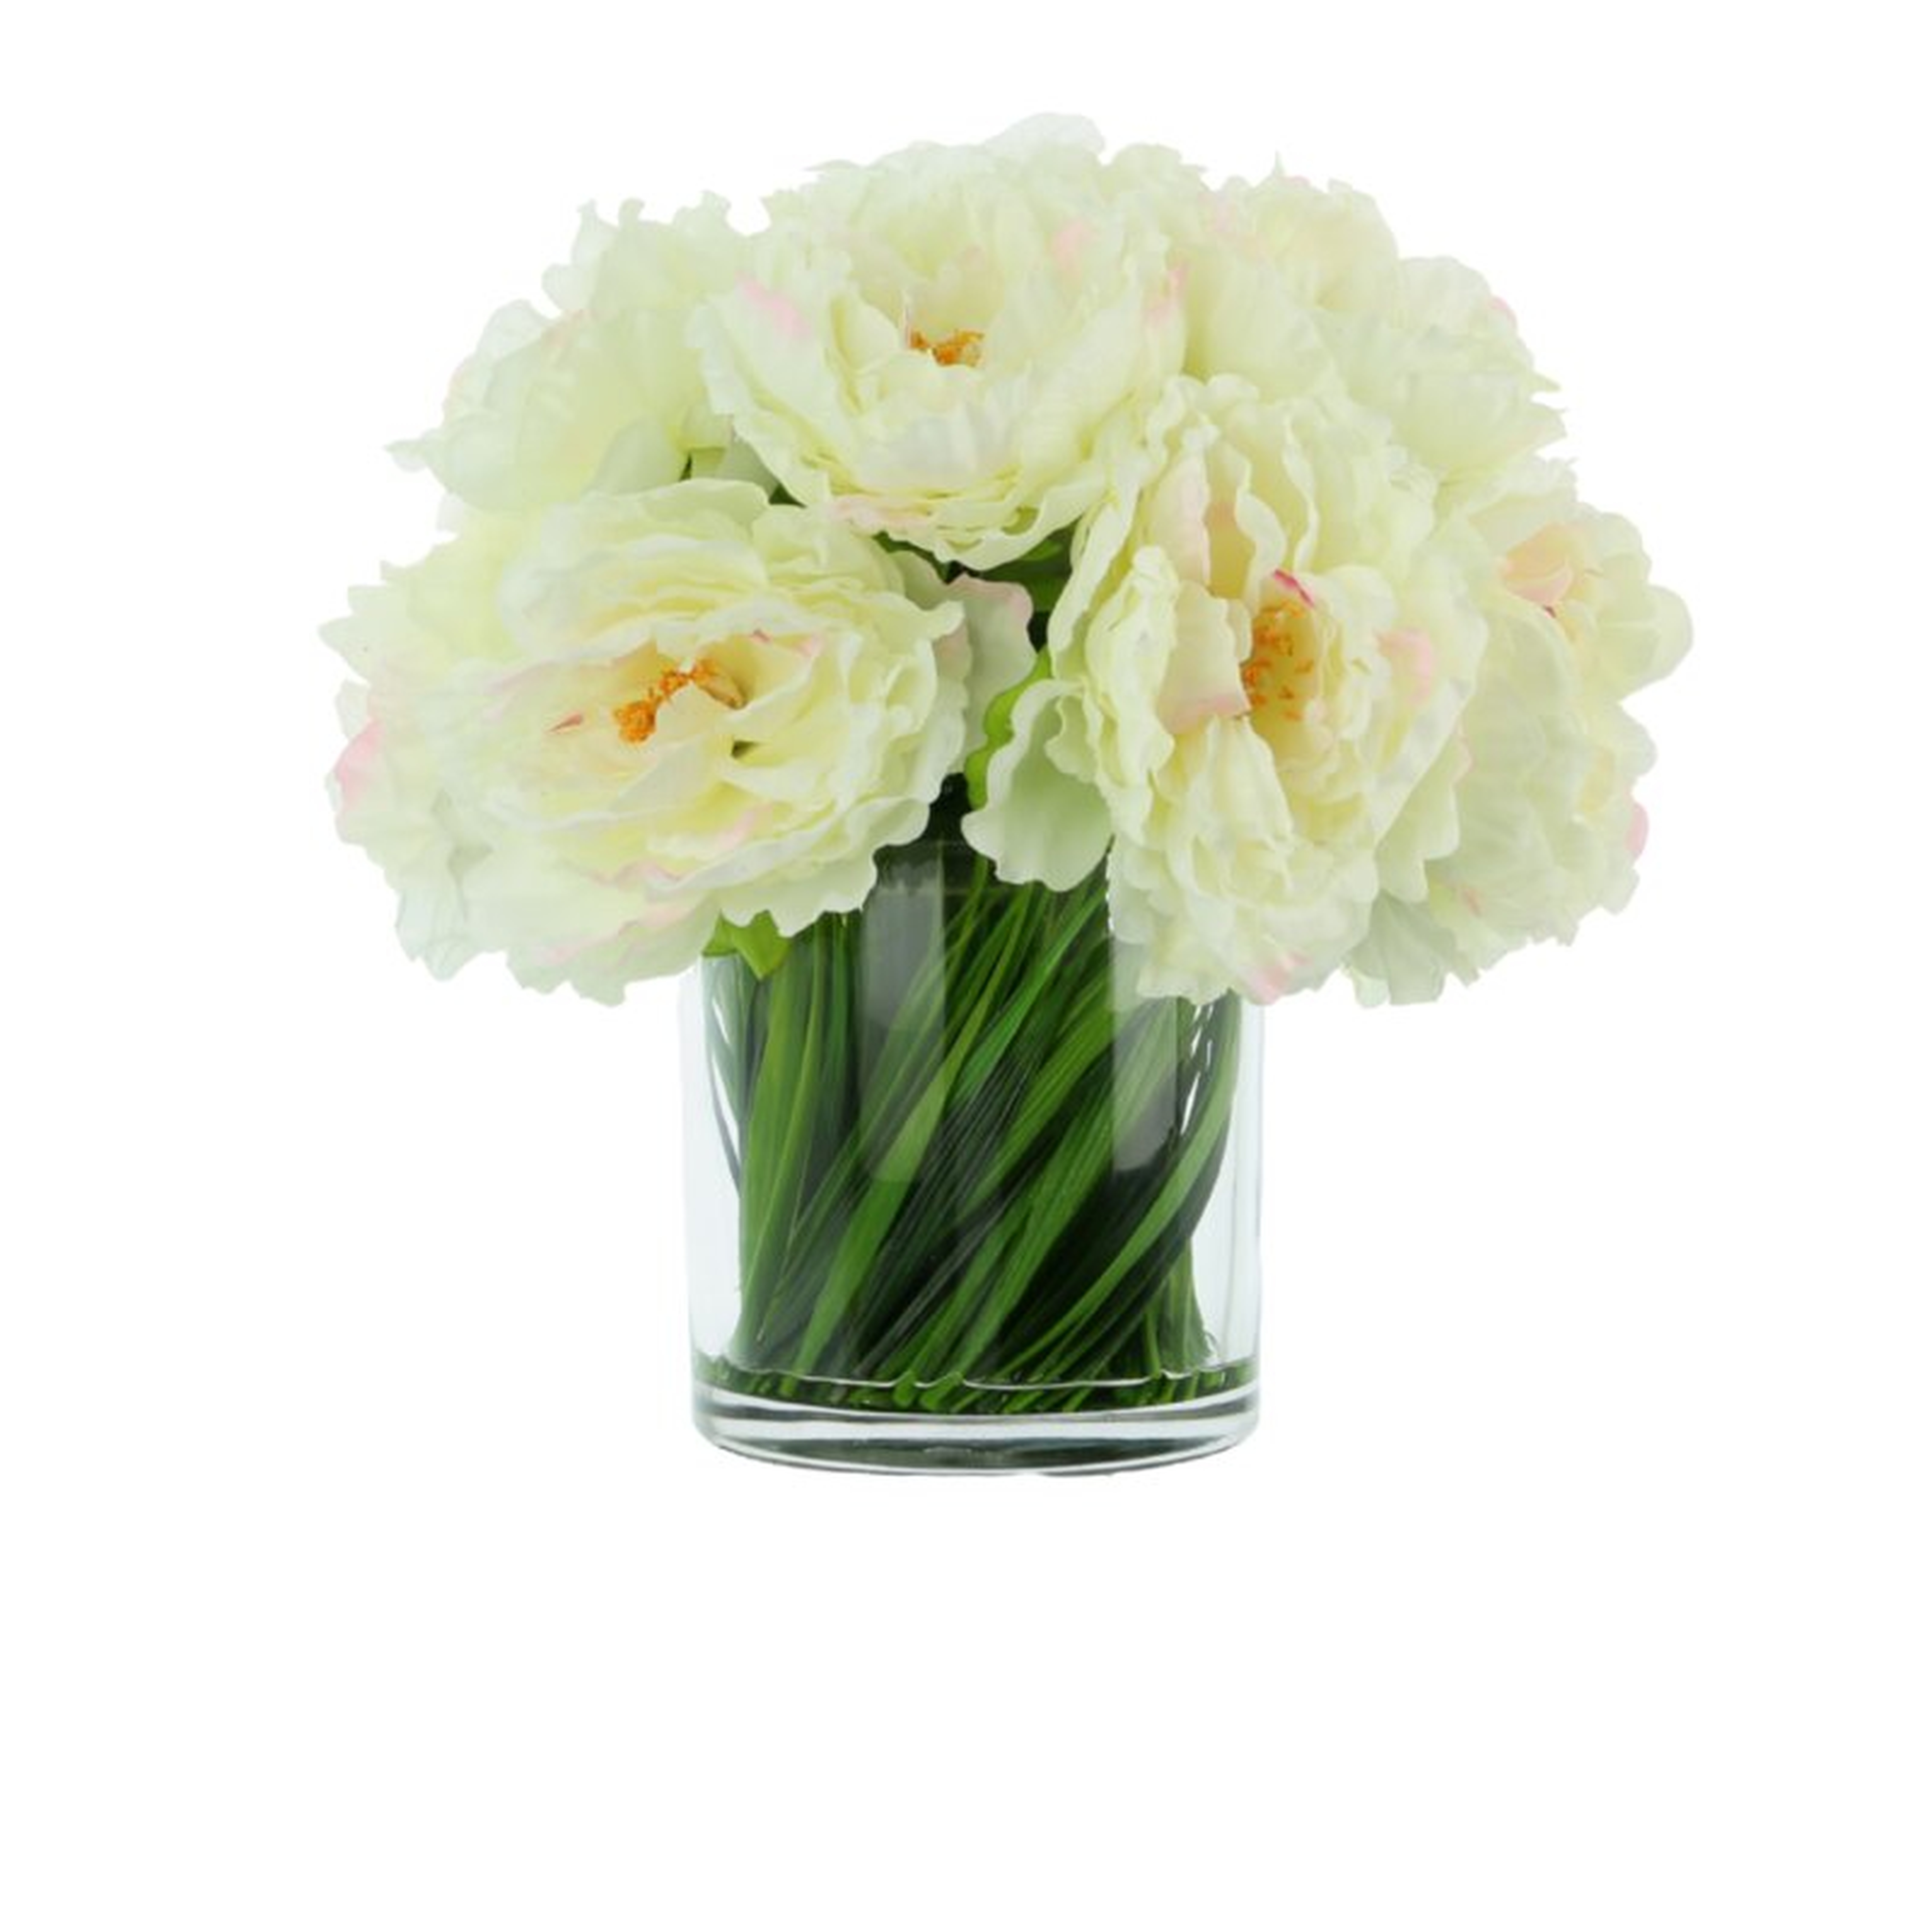 Peonies Floral Arrangement in Vase, White - Perigold